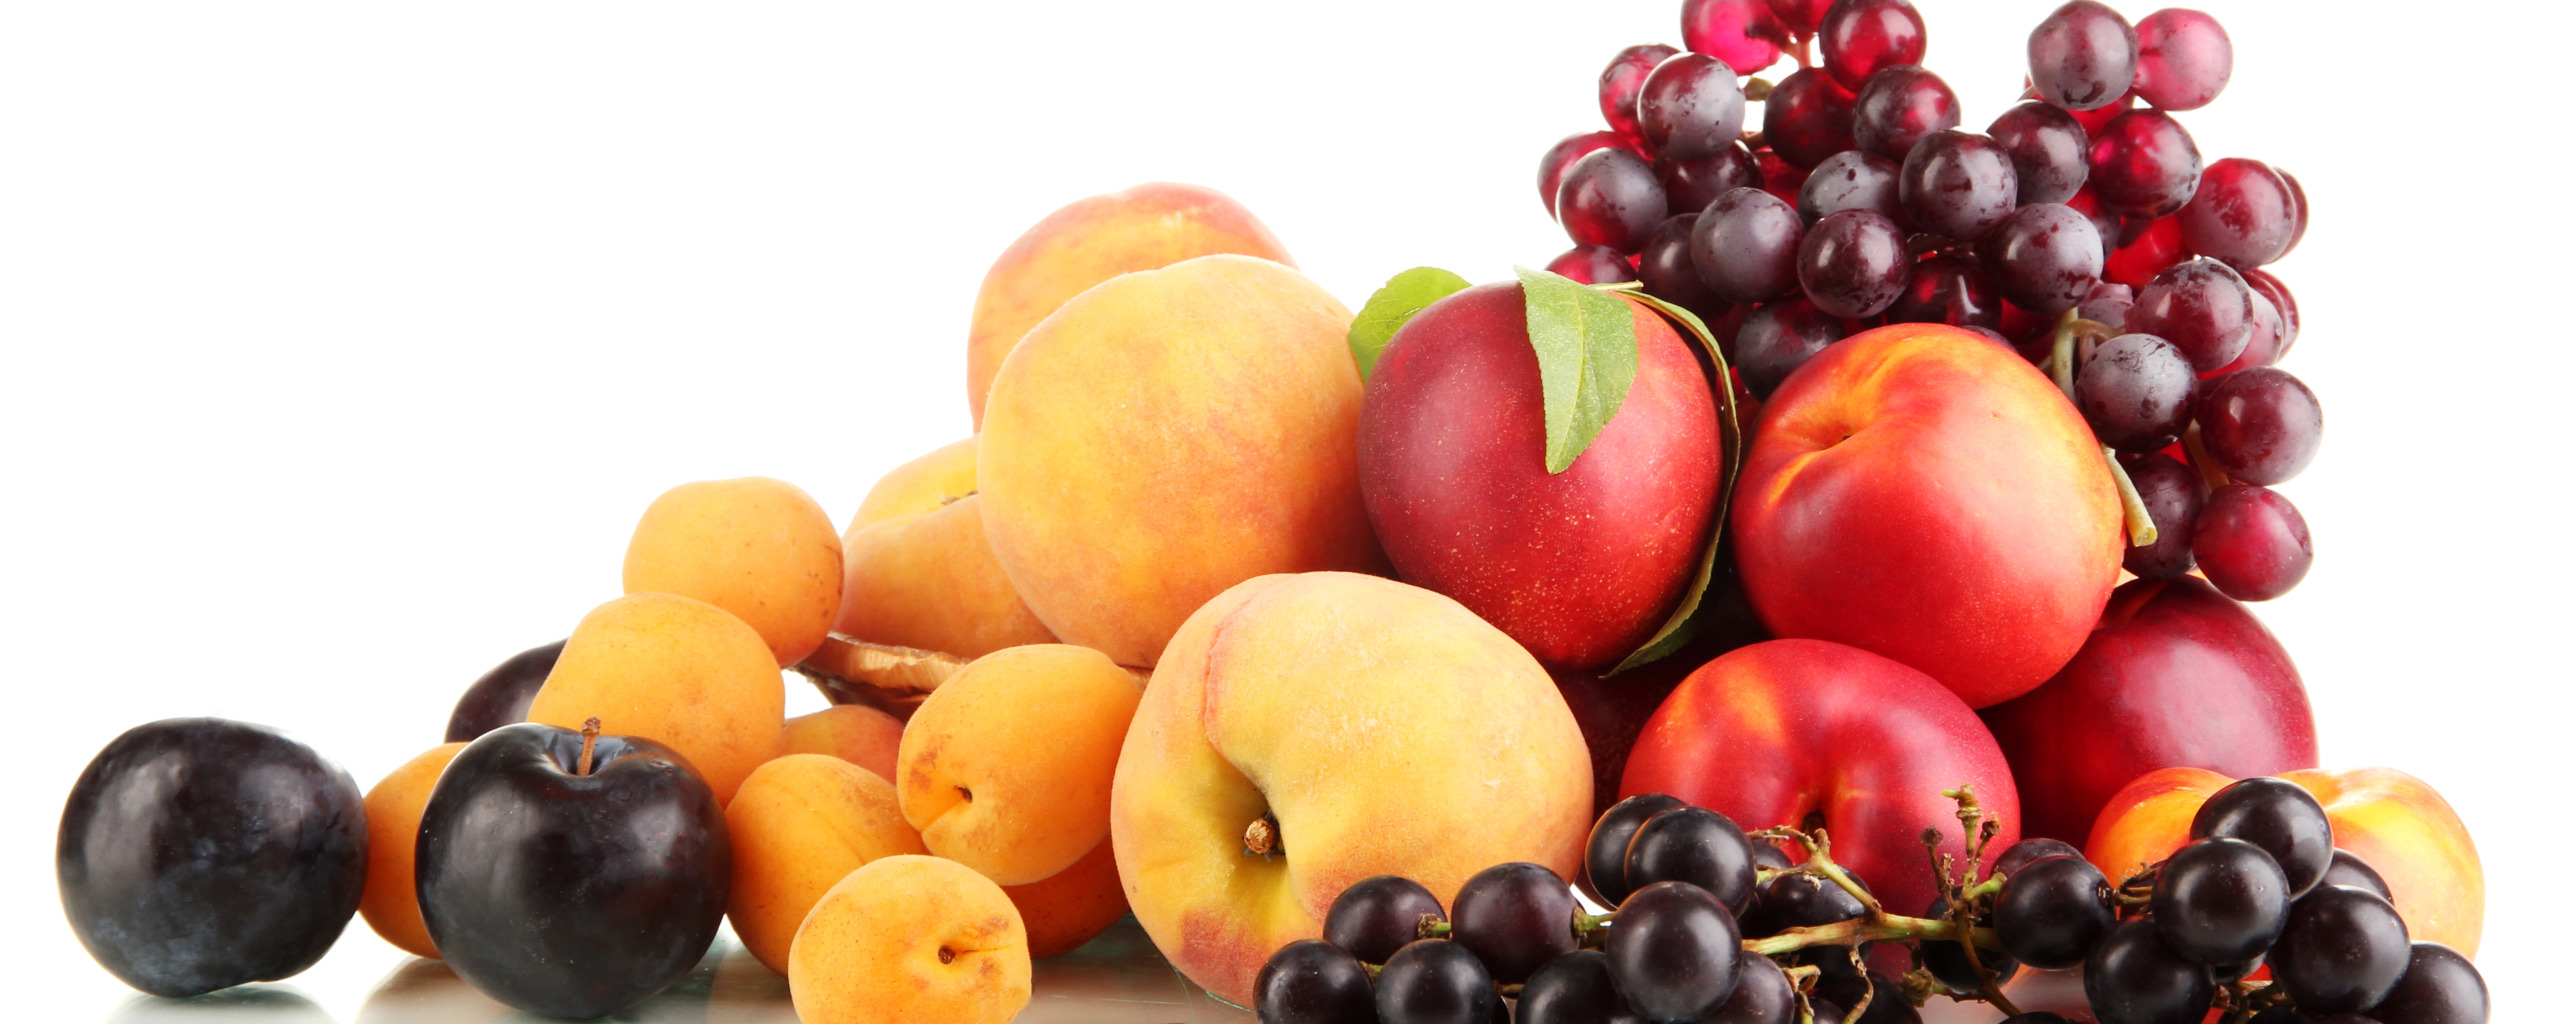 Grape pear. Виноград, груша, абрикос, дыня. Виноград, абрикос, гранат, Арбуз. Косточковые культуры. Яблоки груши виноград.